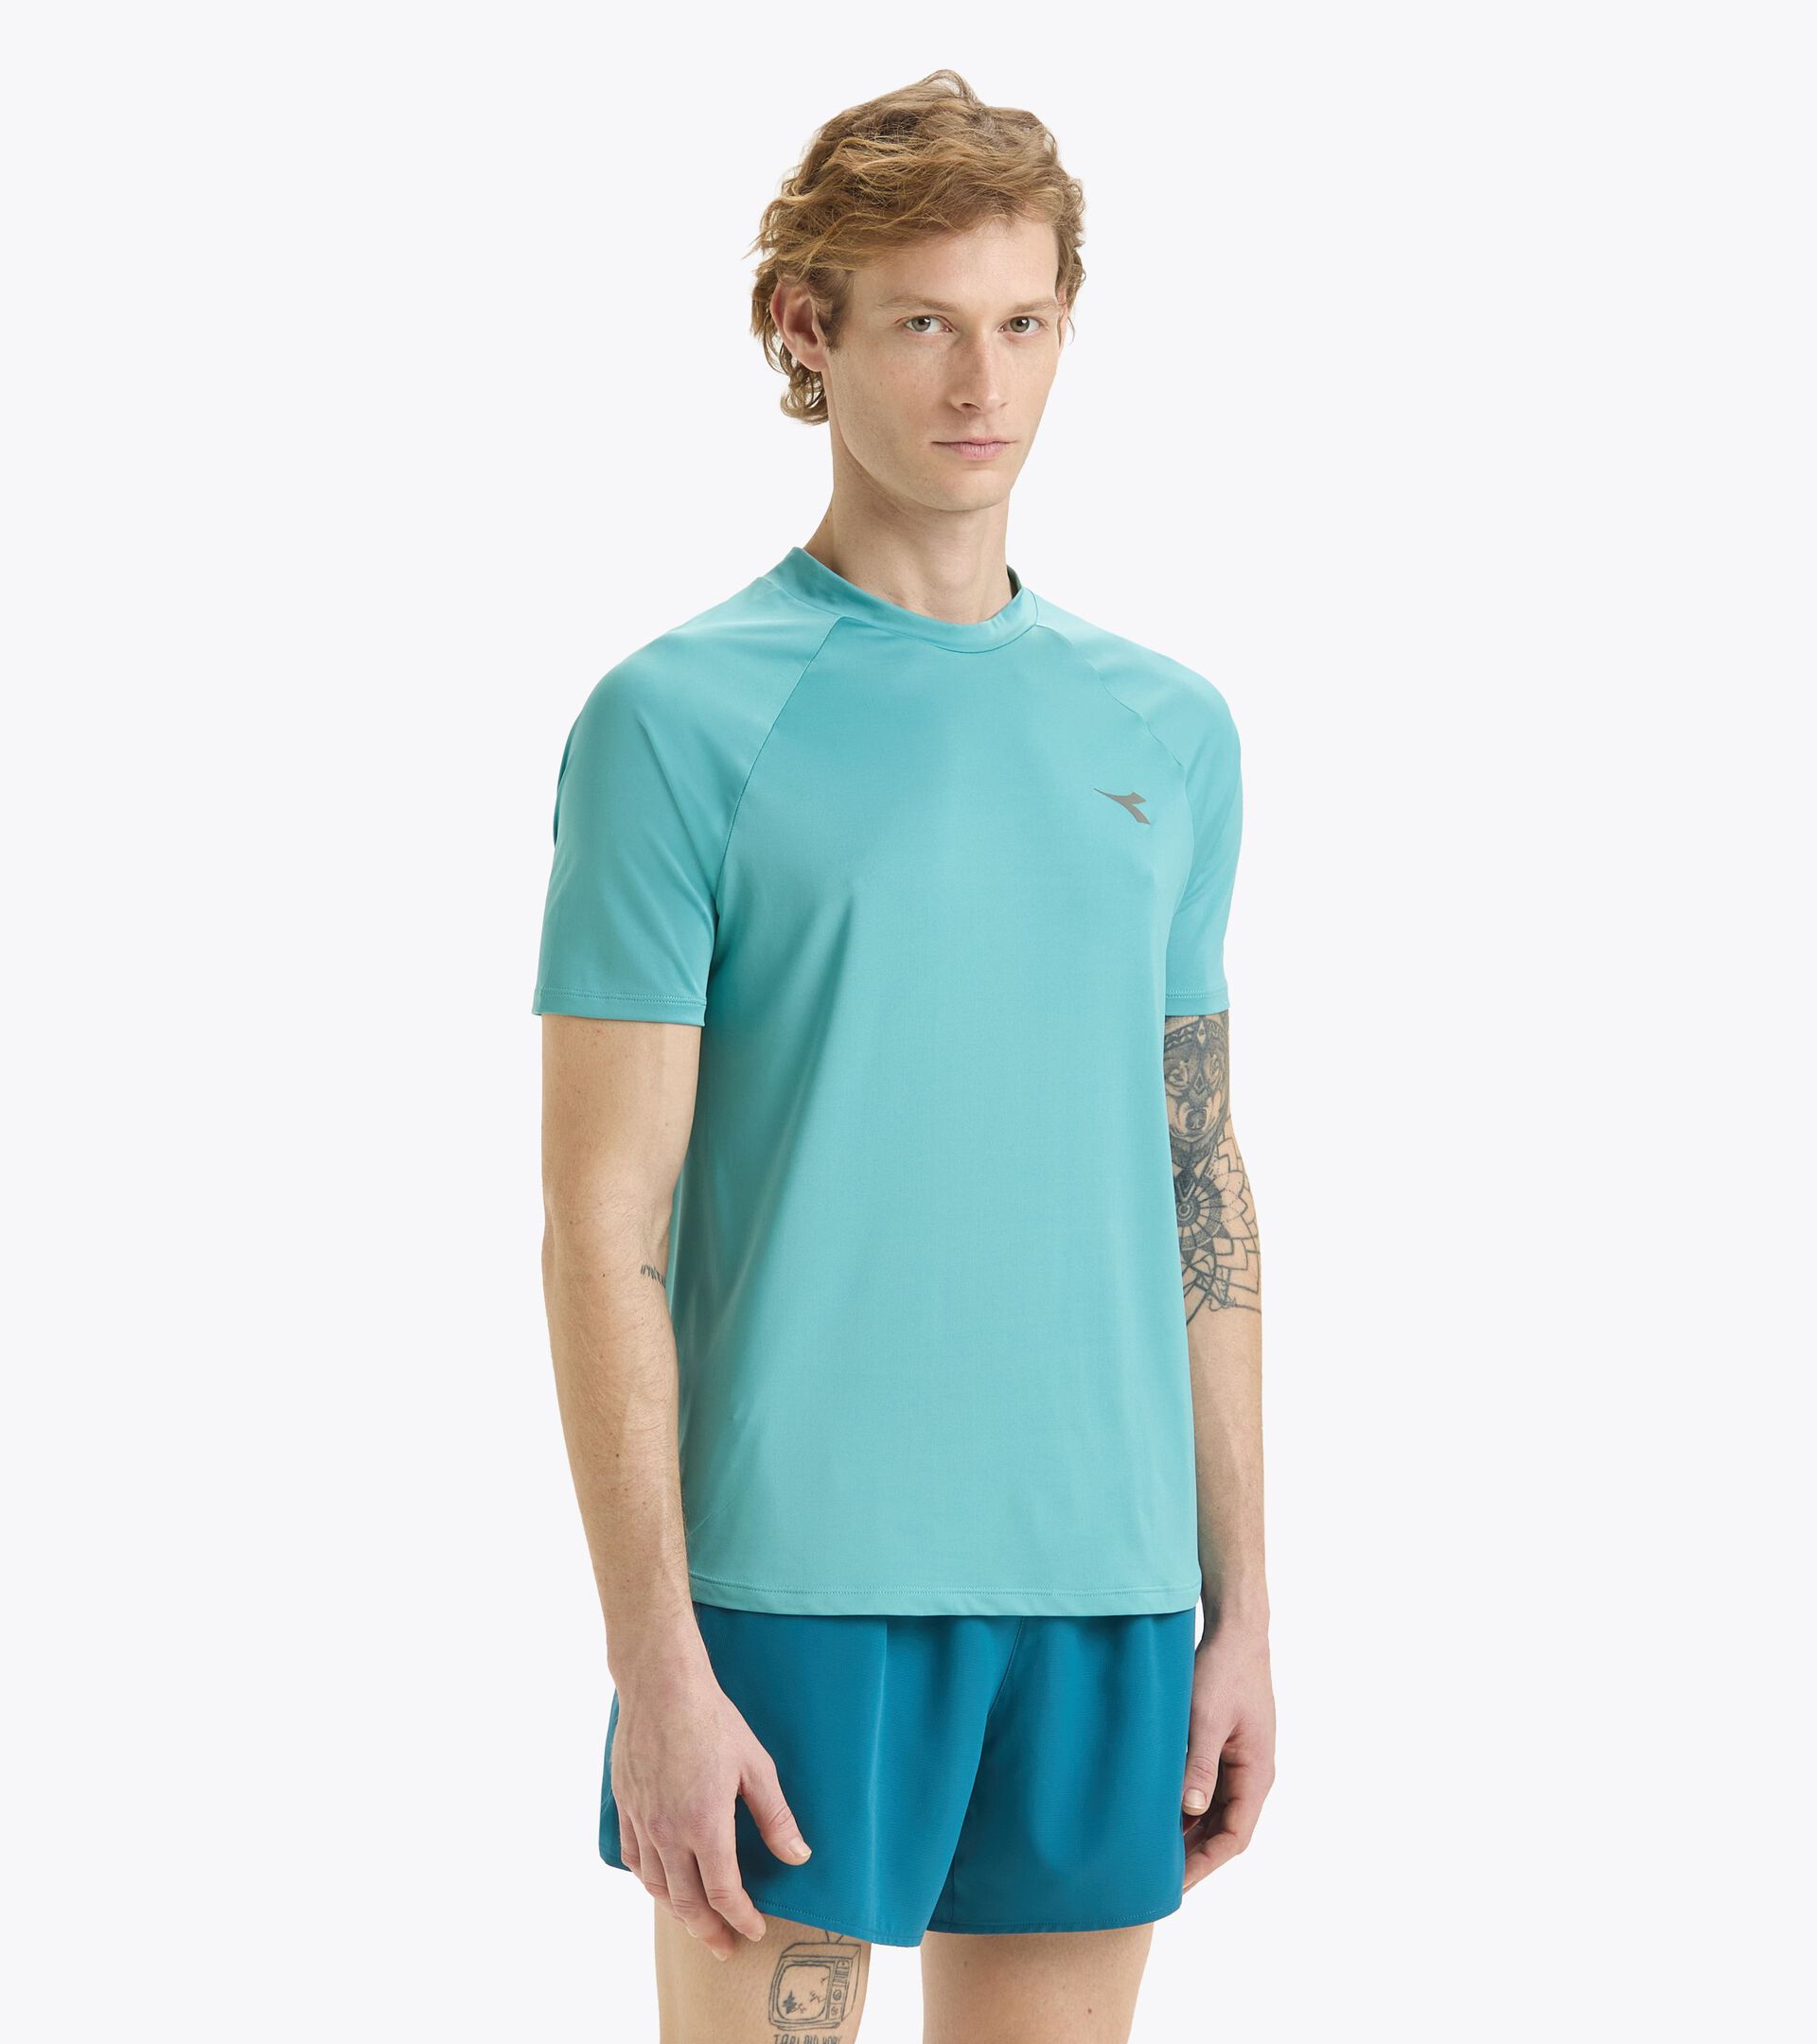 Camiseta de running - Tejido ligero - Hombre
 SUPER LIGHT SS T-SHIRT DUSTY TURQUOISE - Diadora